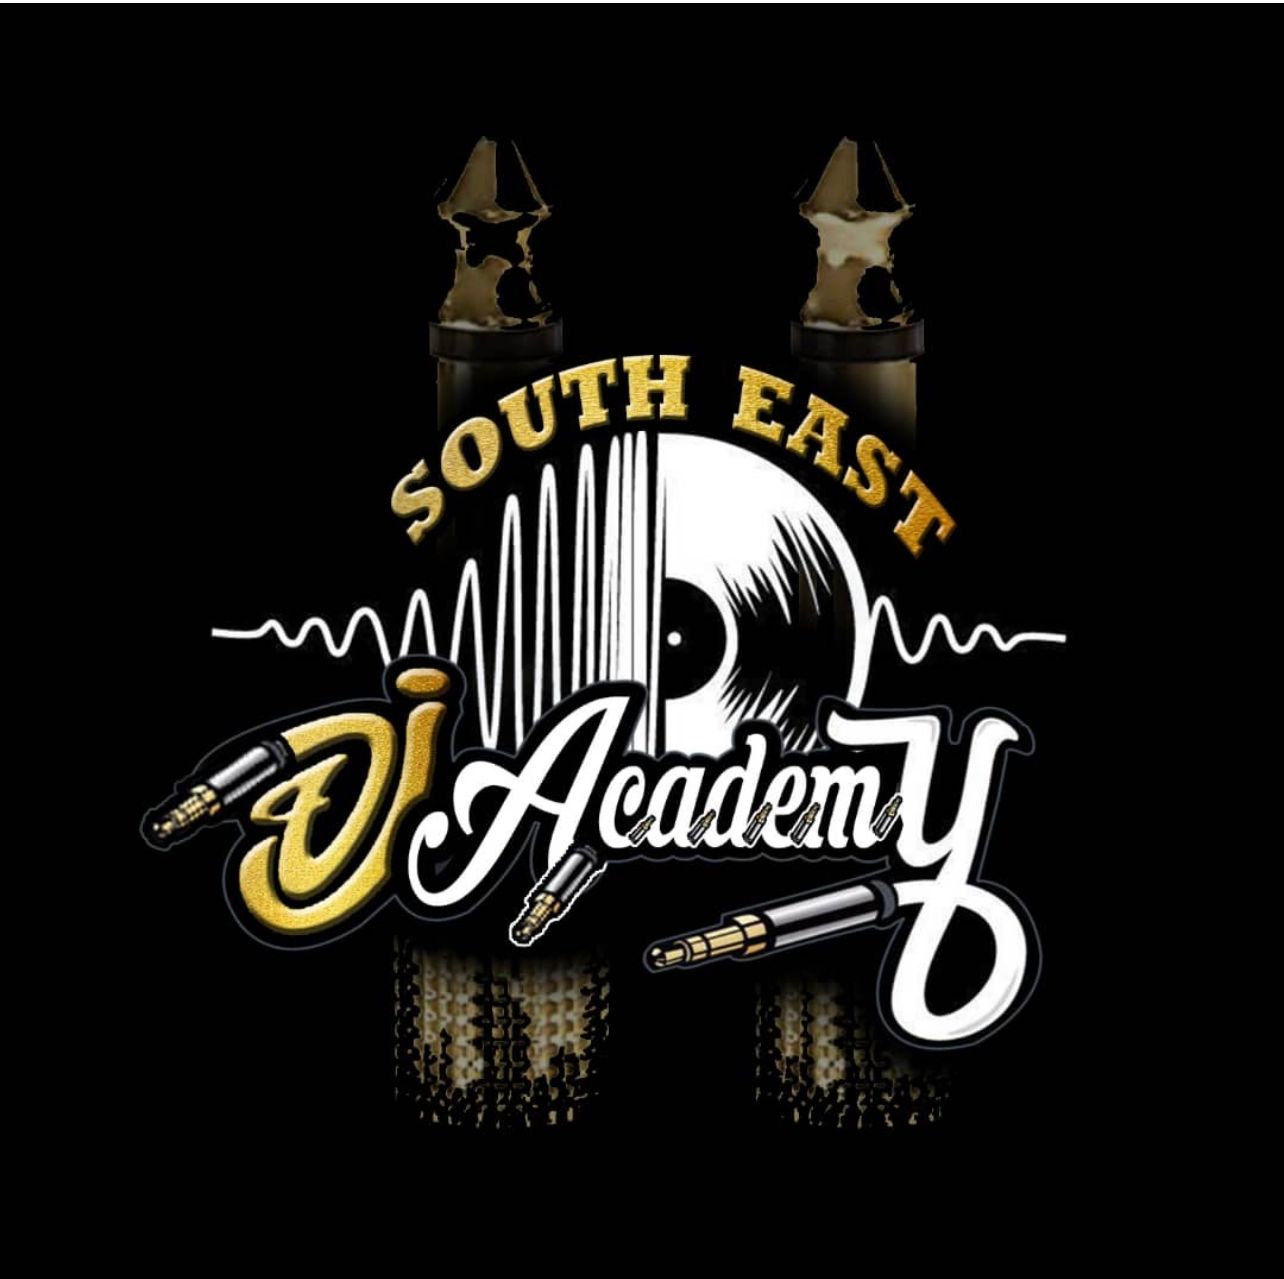 South East DJ Academy